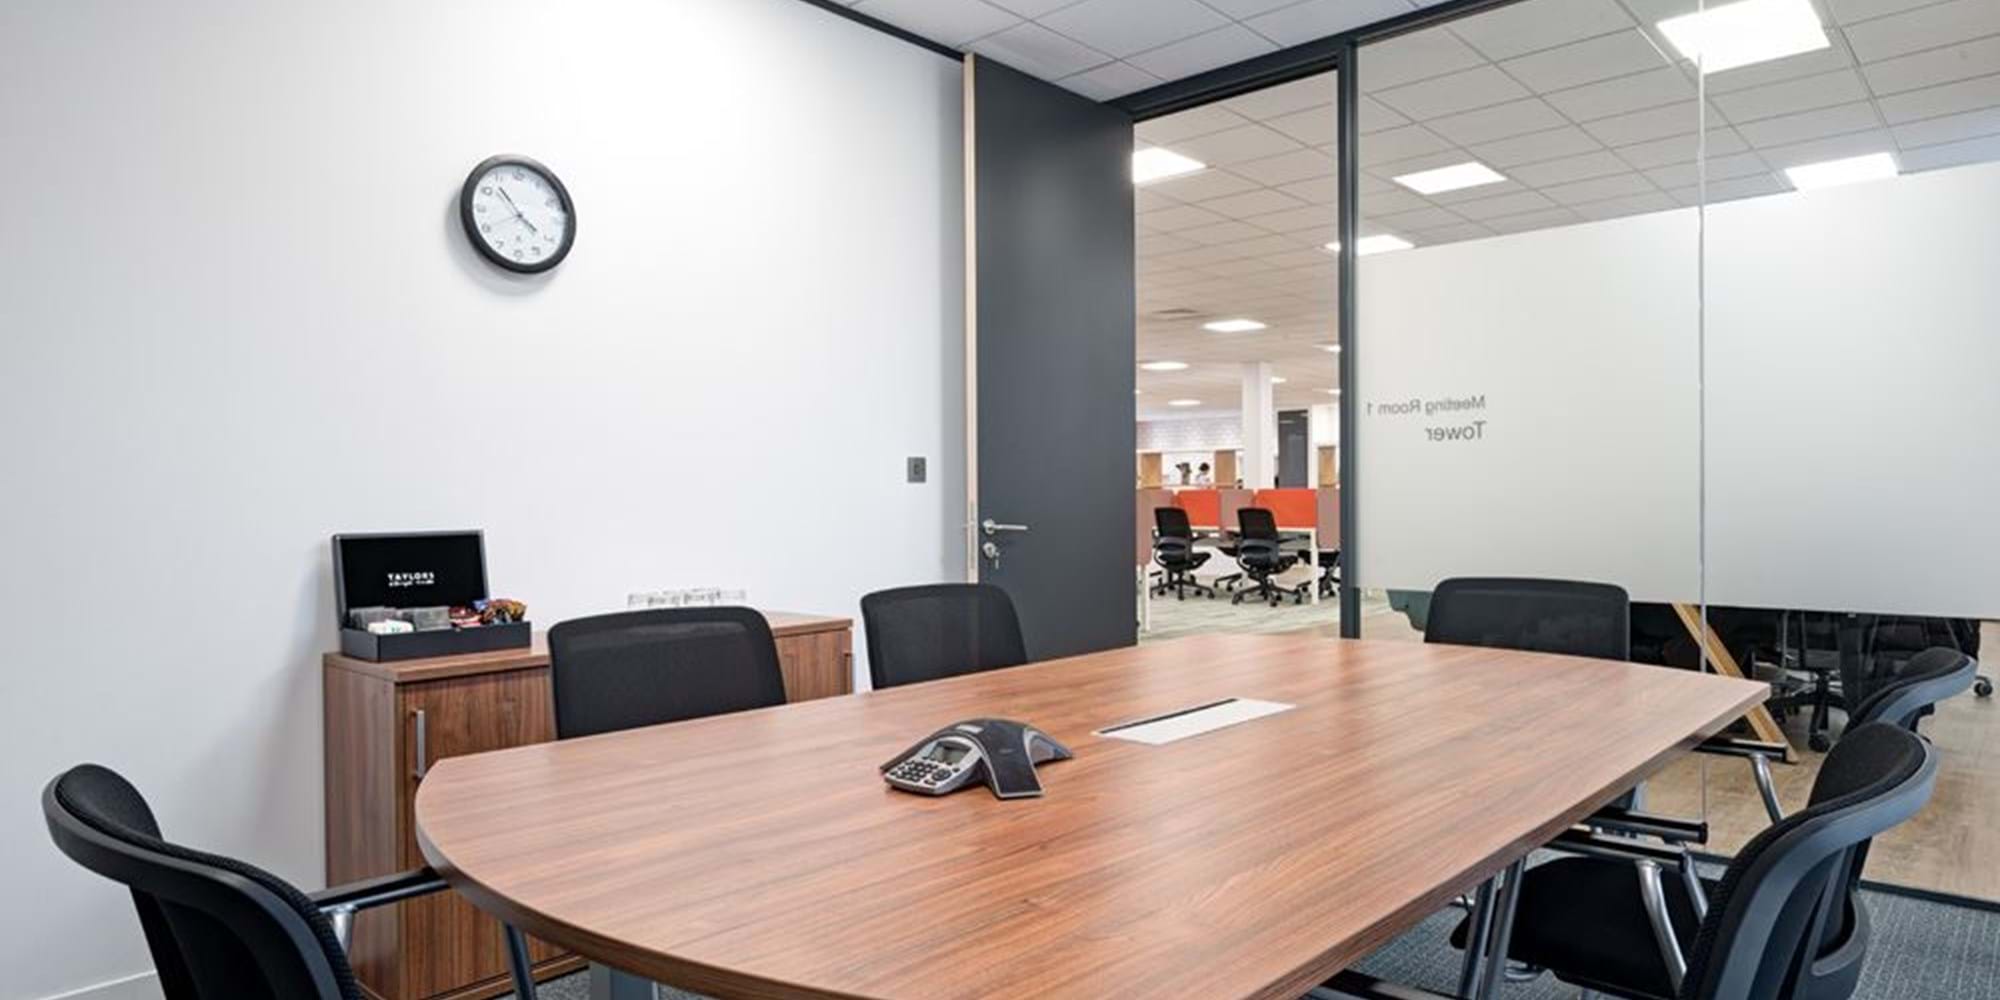 Modus Workspace office design, fit out and refurbishment - Regus Stokenchurch - Regus Gerrads Cross 04 highres sRGB.jpg